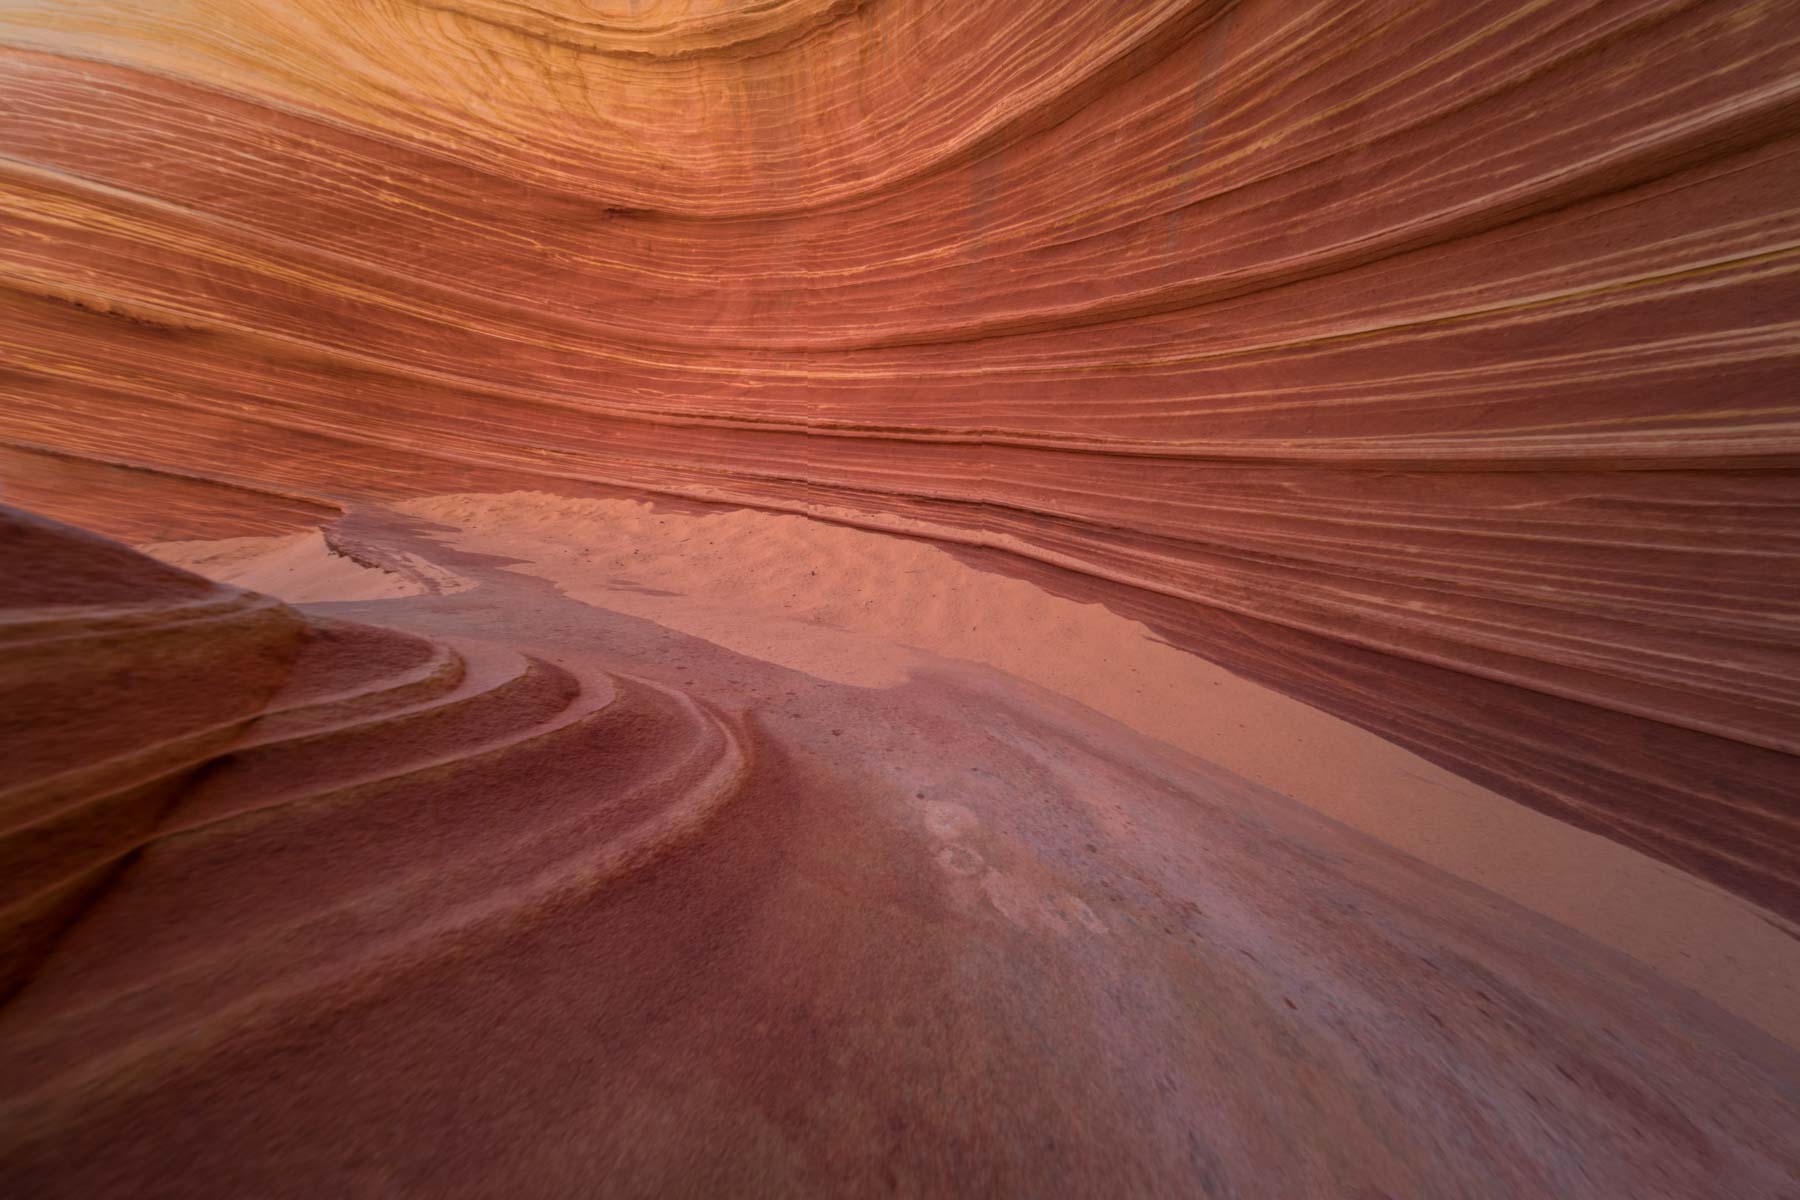 Small slot canyon near The Wave in Arizona shot at 10mm